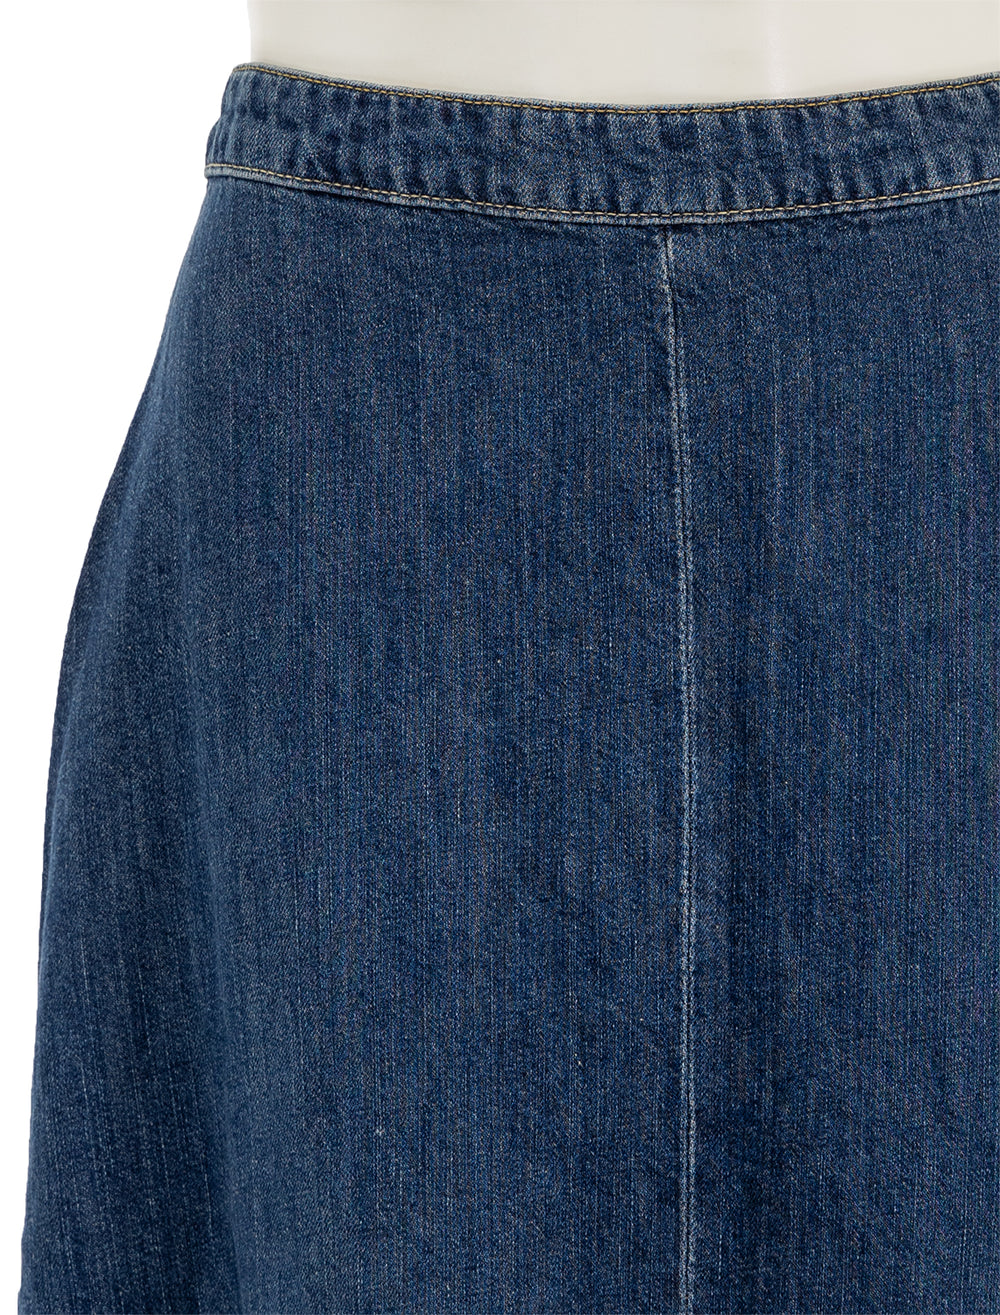 Close-up view of Nili Lotan's astrid denim skirt in classic wash.